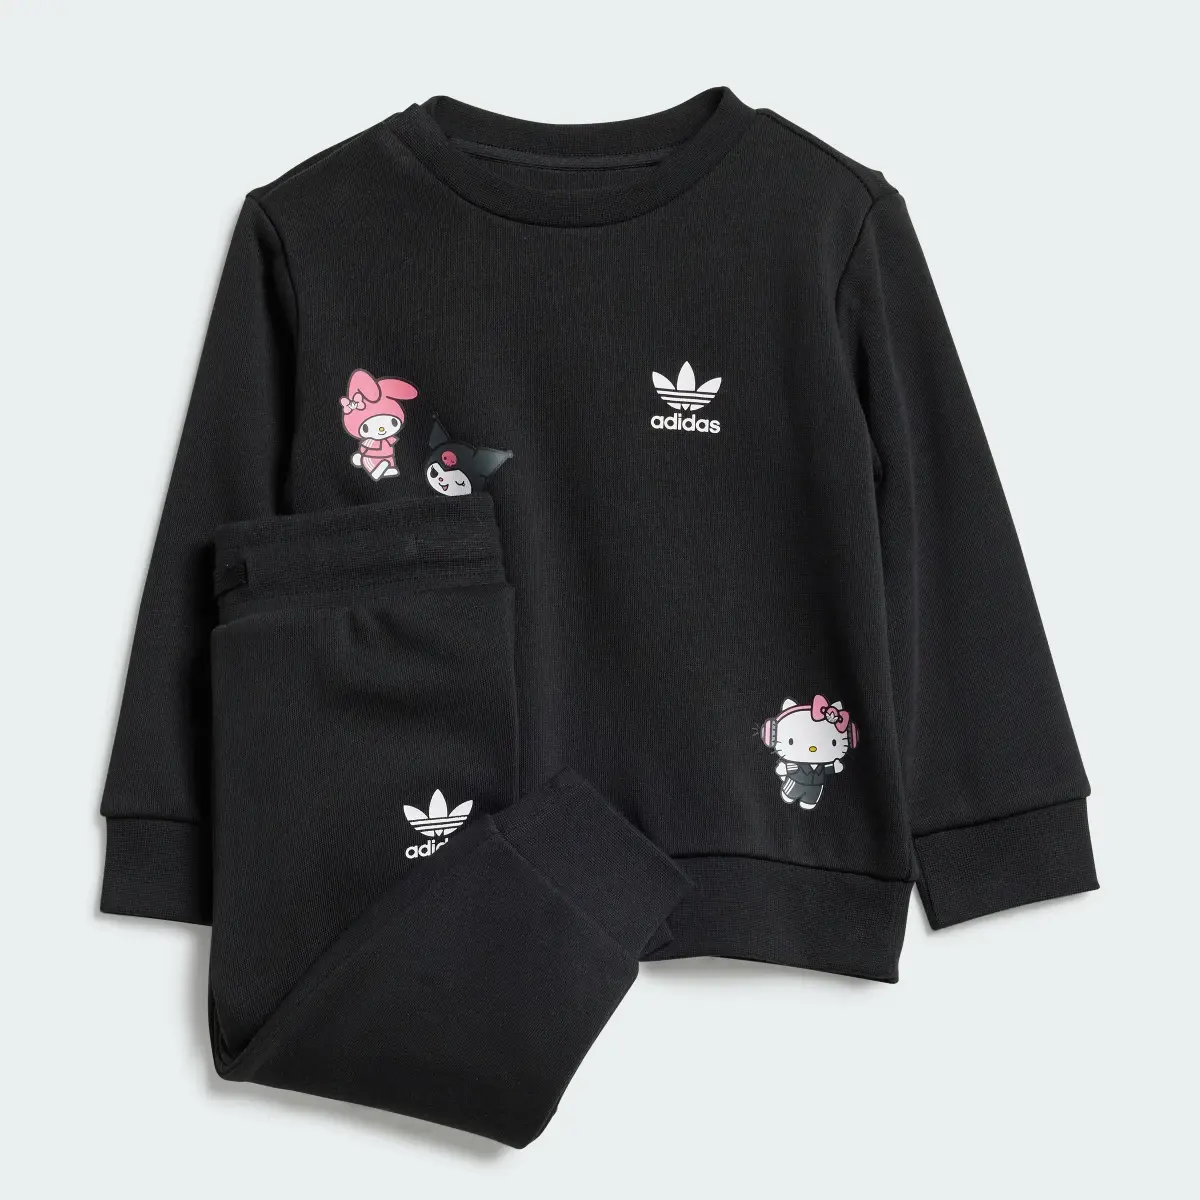 Adidas Originals x Hello Kitty Crew Set. 1